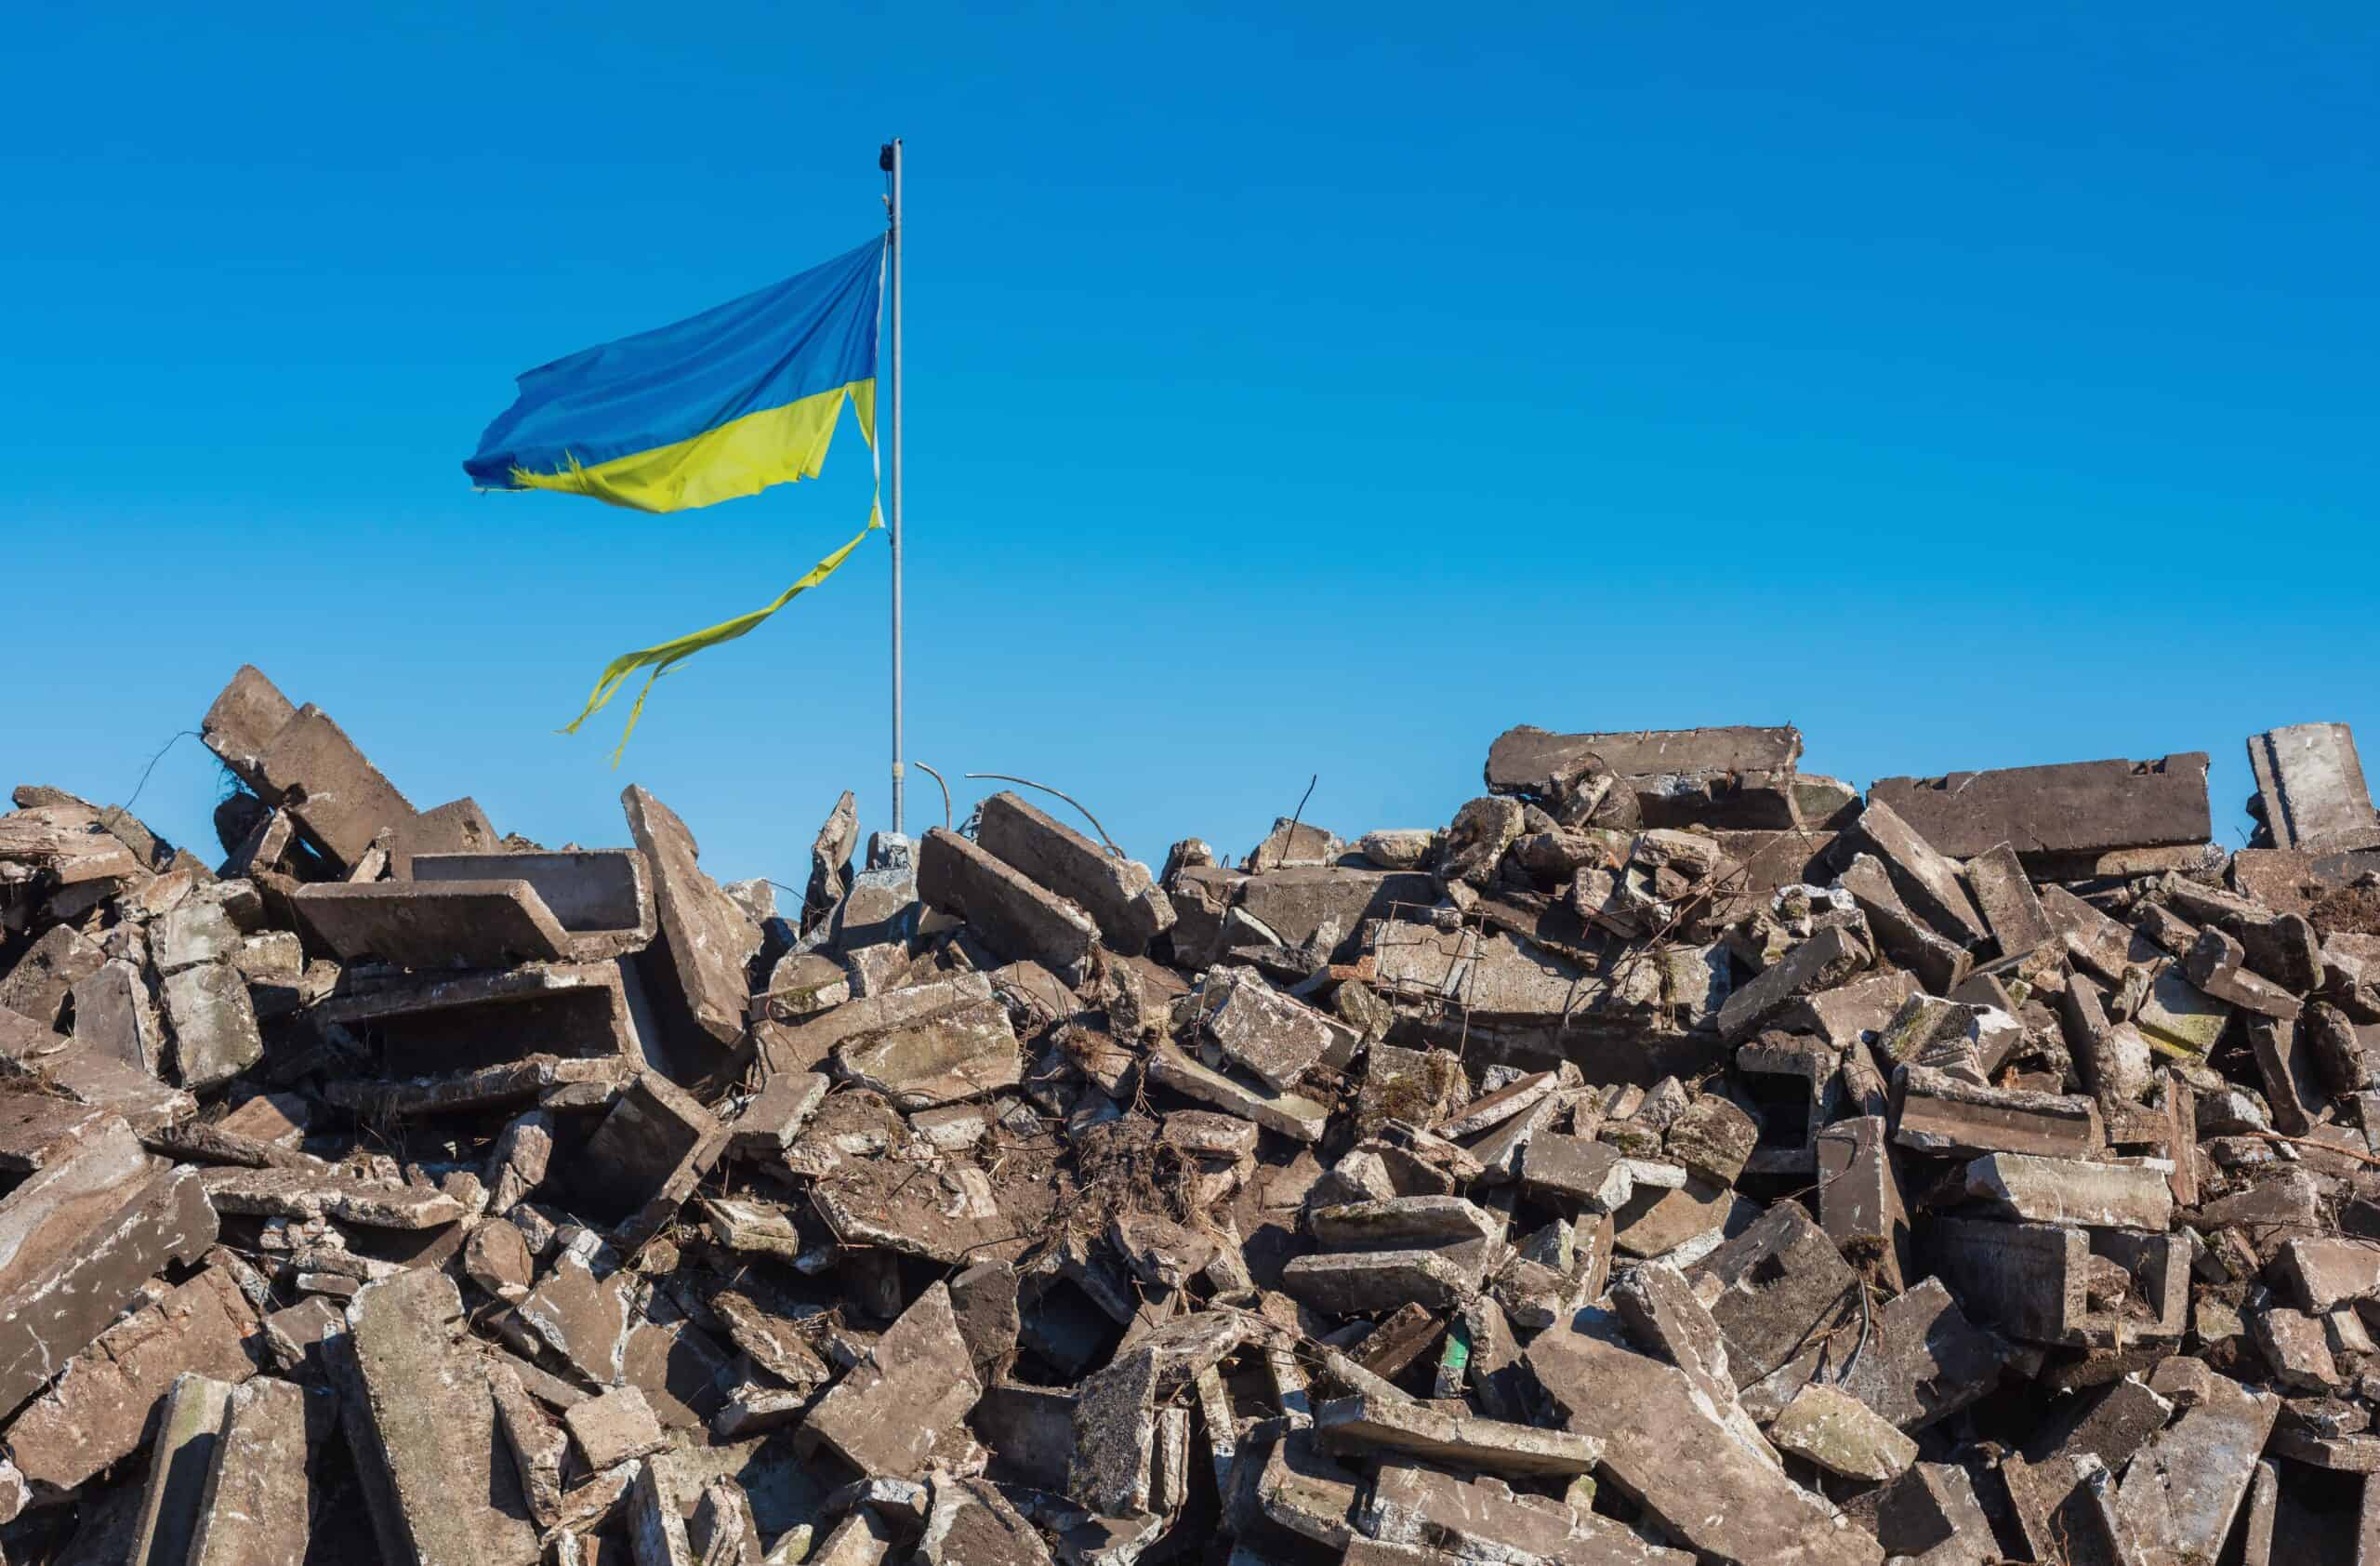 Ukraine | war in ukraine. Destroyed Ukrainian building and damaged flag in the wind.